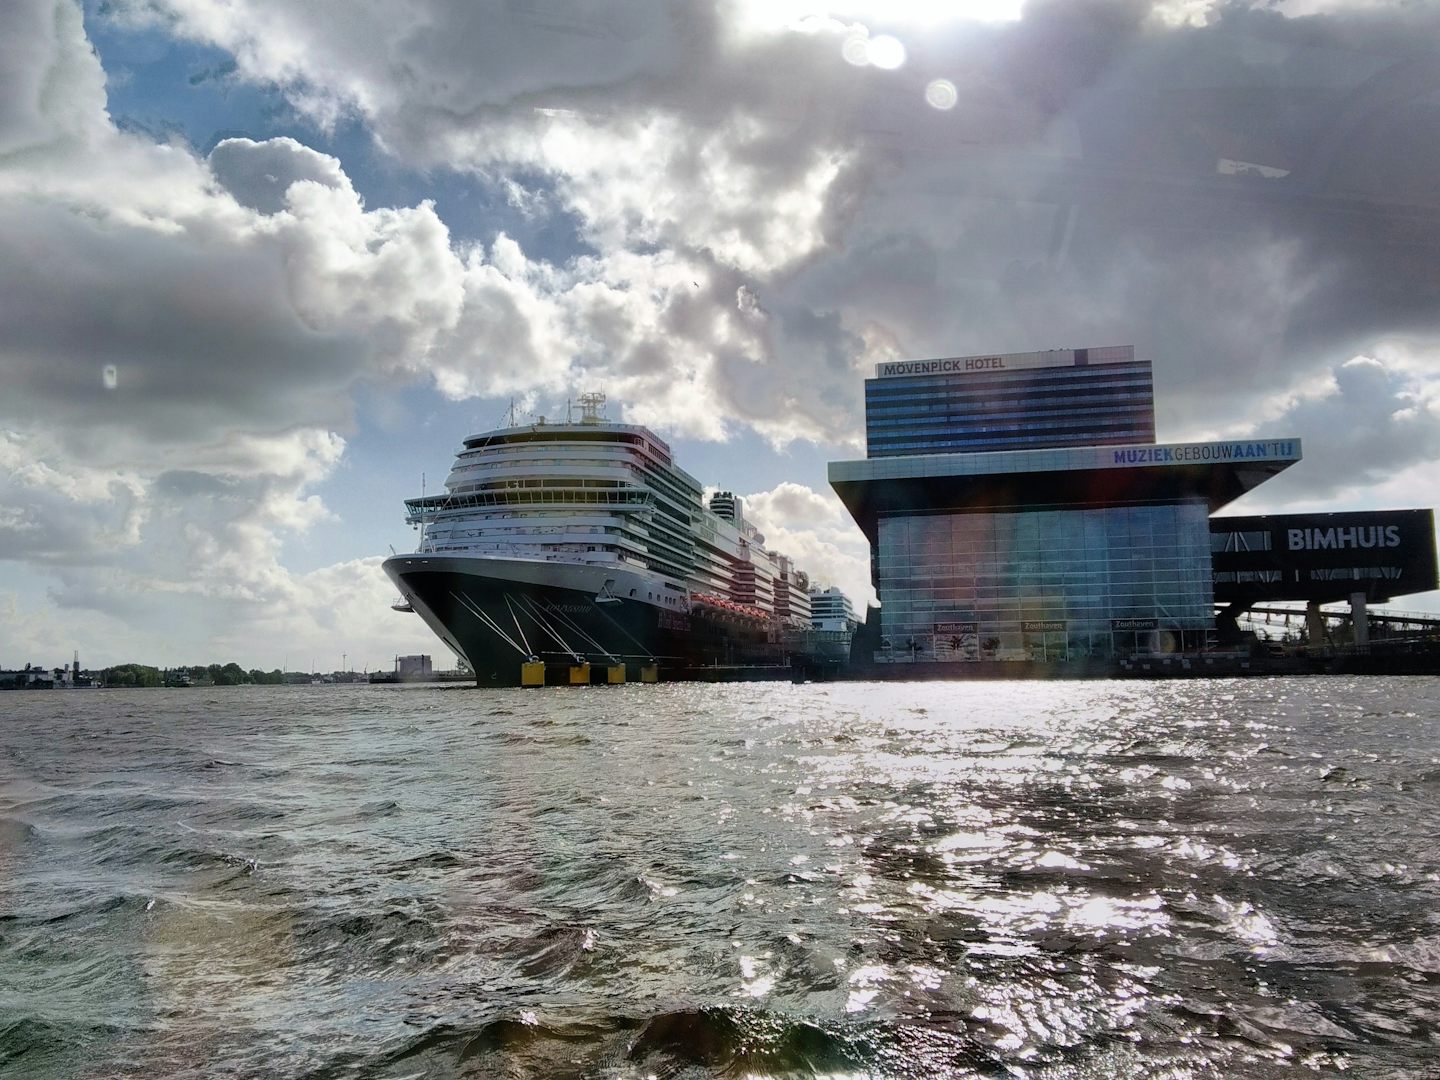 Koningsdam docked in Amsterdam.